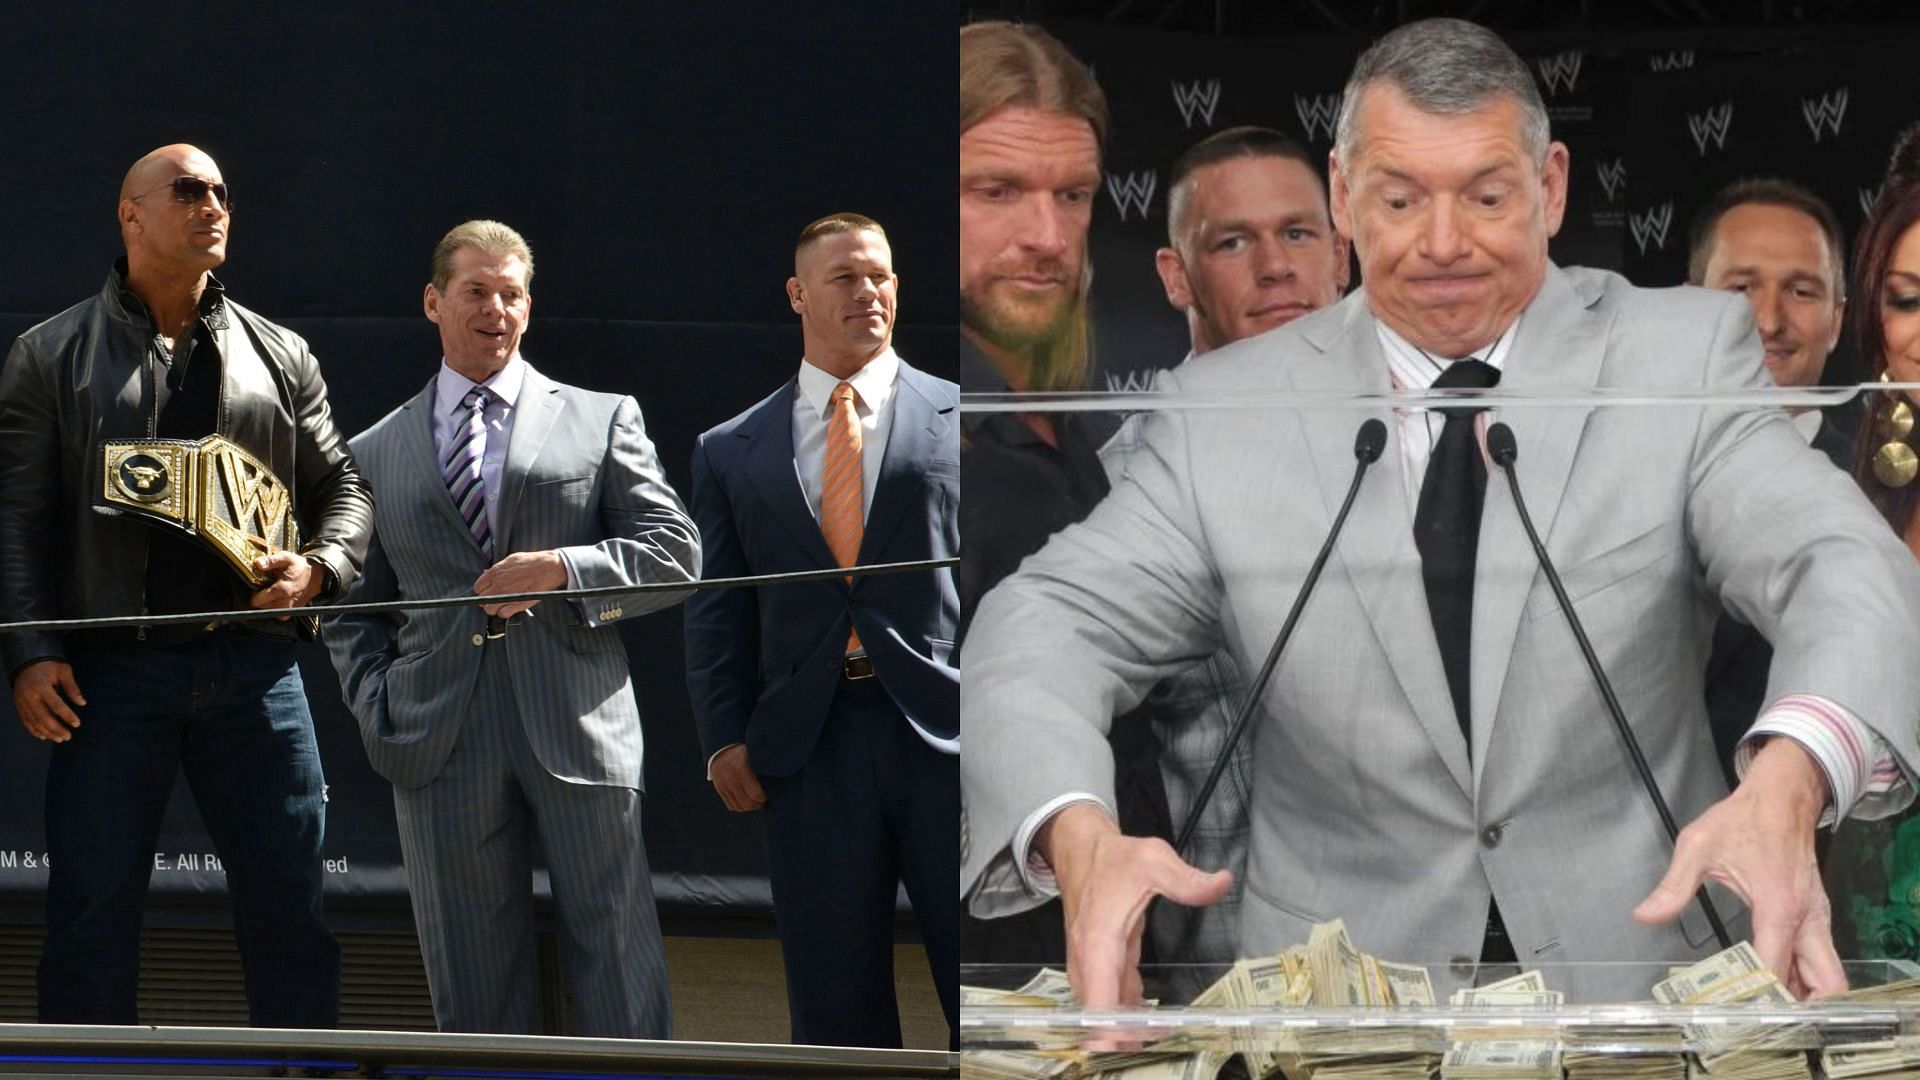 Mr. McMahon with Dwayne Johnson and John Cena